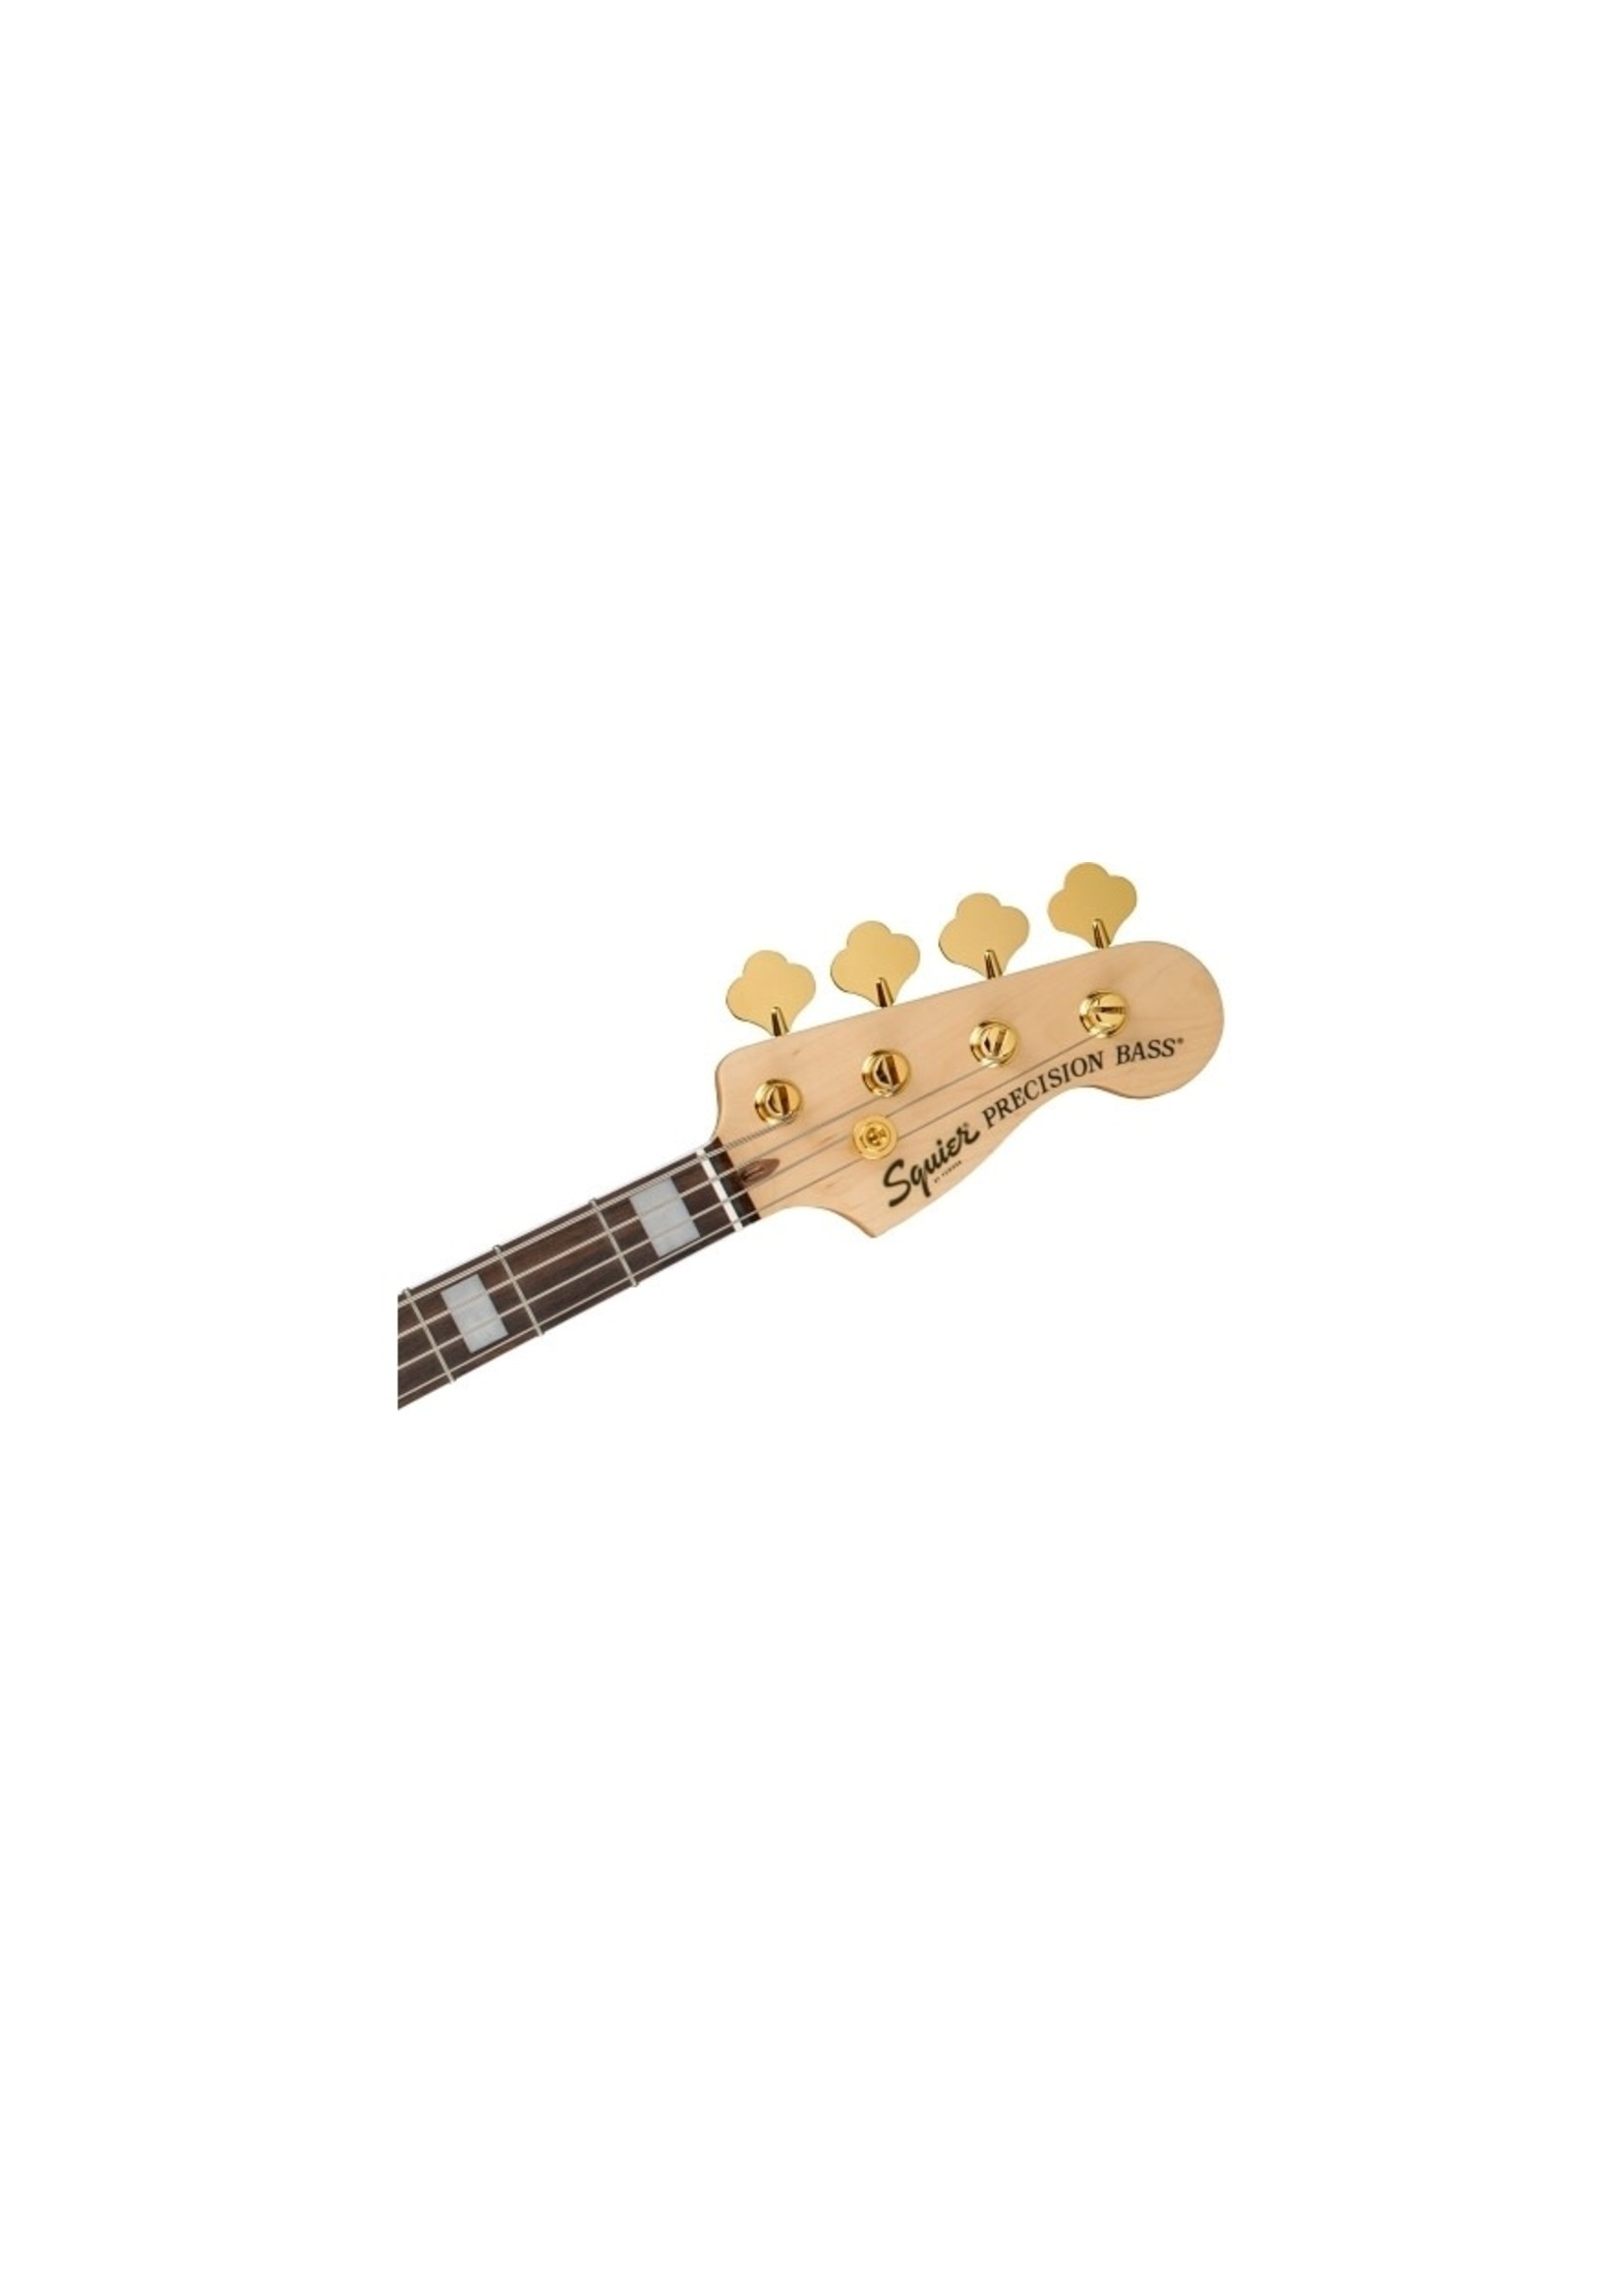 Squier Squier 0379430506 40th Anniversary Precision Bass, Gold Edition, Laurel Fretboard, Gold Anodized Pickguard, Black